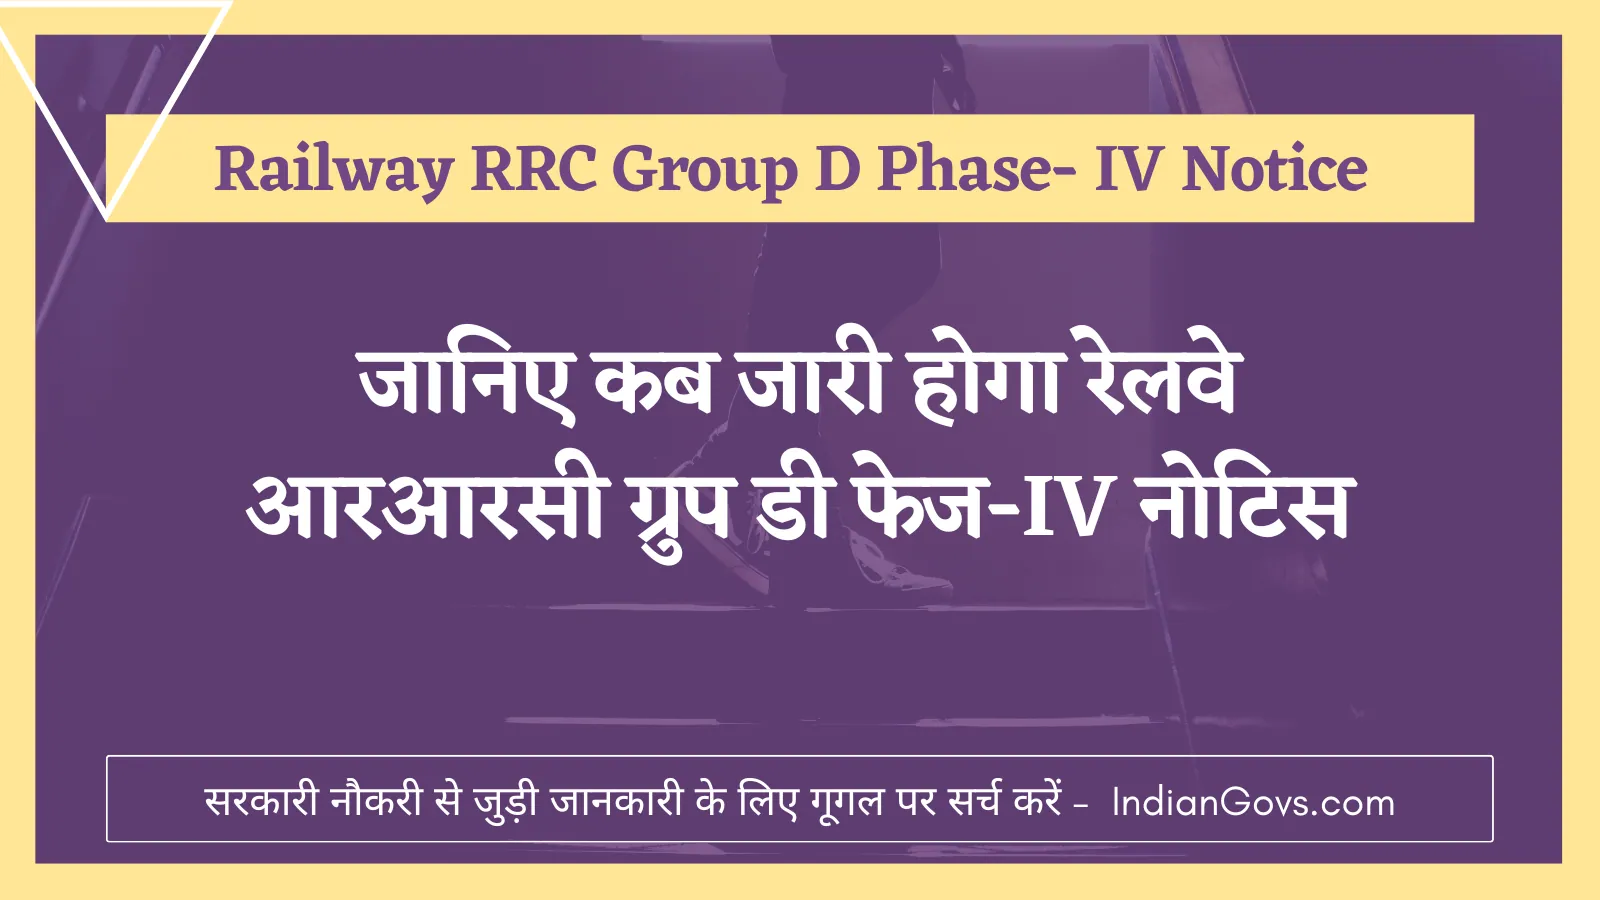 Railway RRC Group D Phase-IV Notice